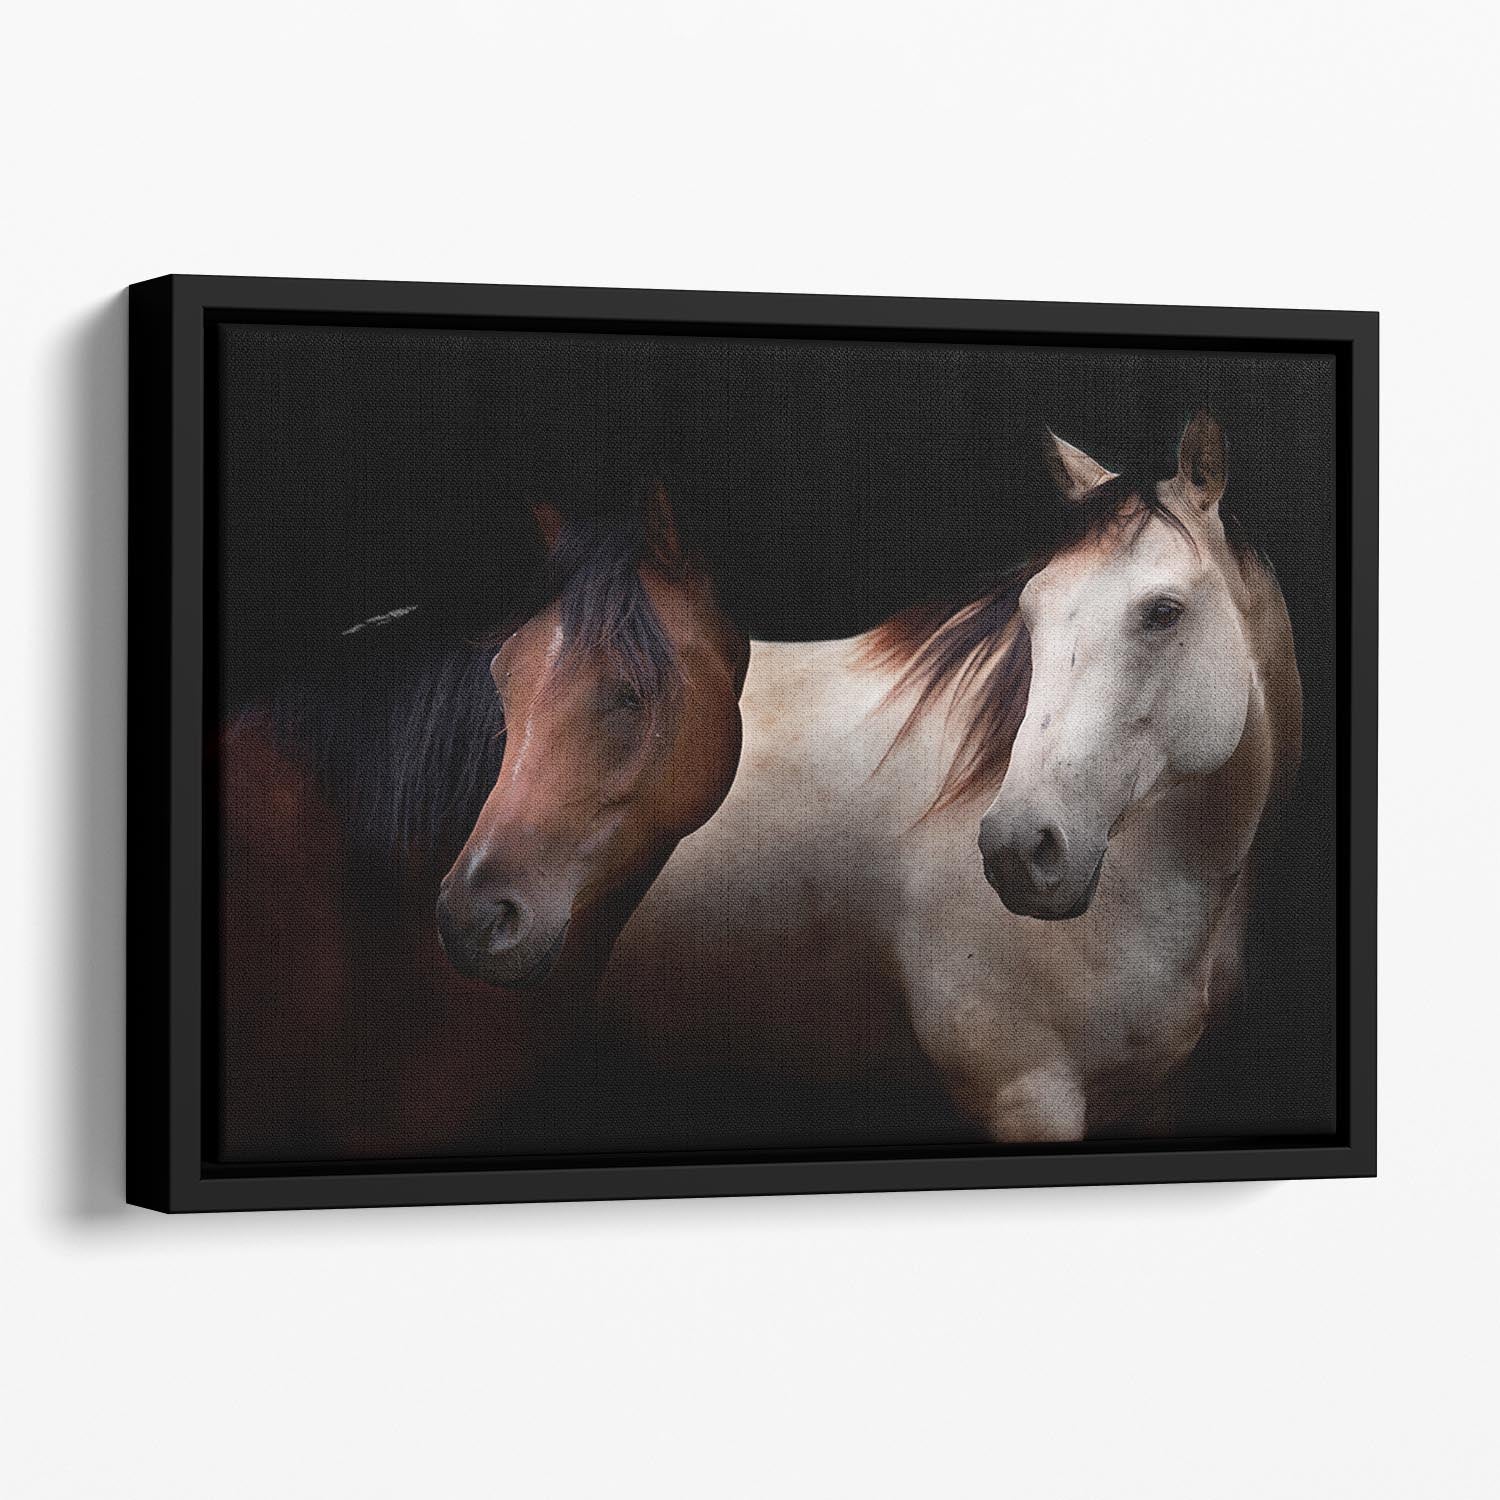 Horses In The Dark Floating Framed Canvas - Canvas Art Rocks - 1